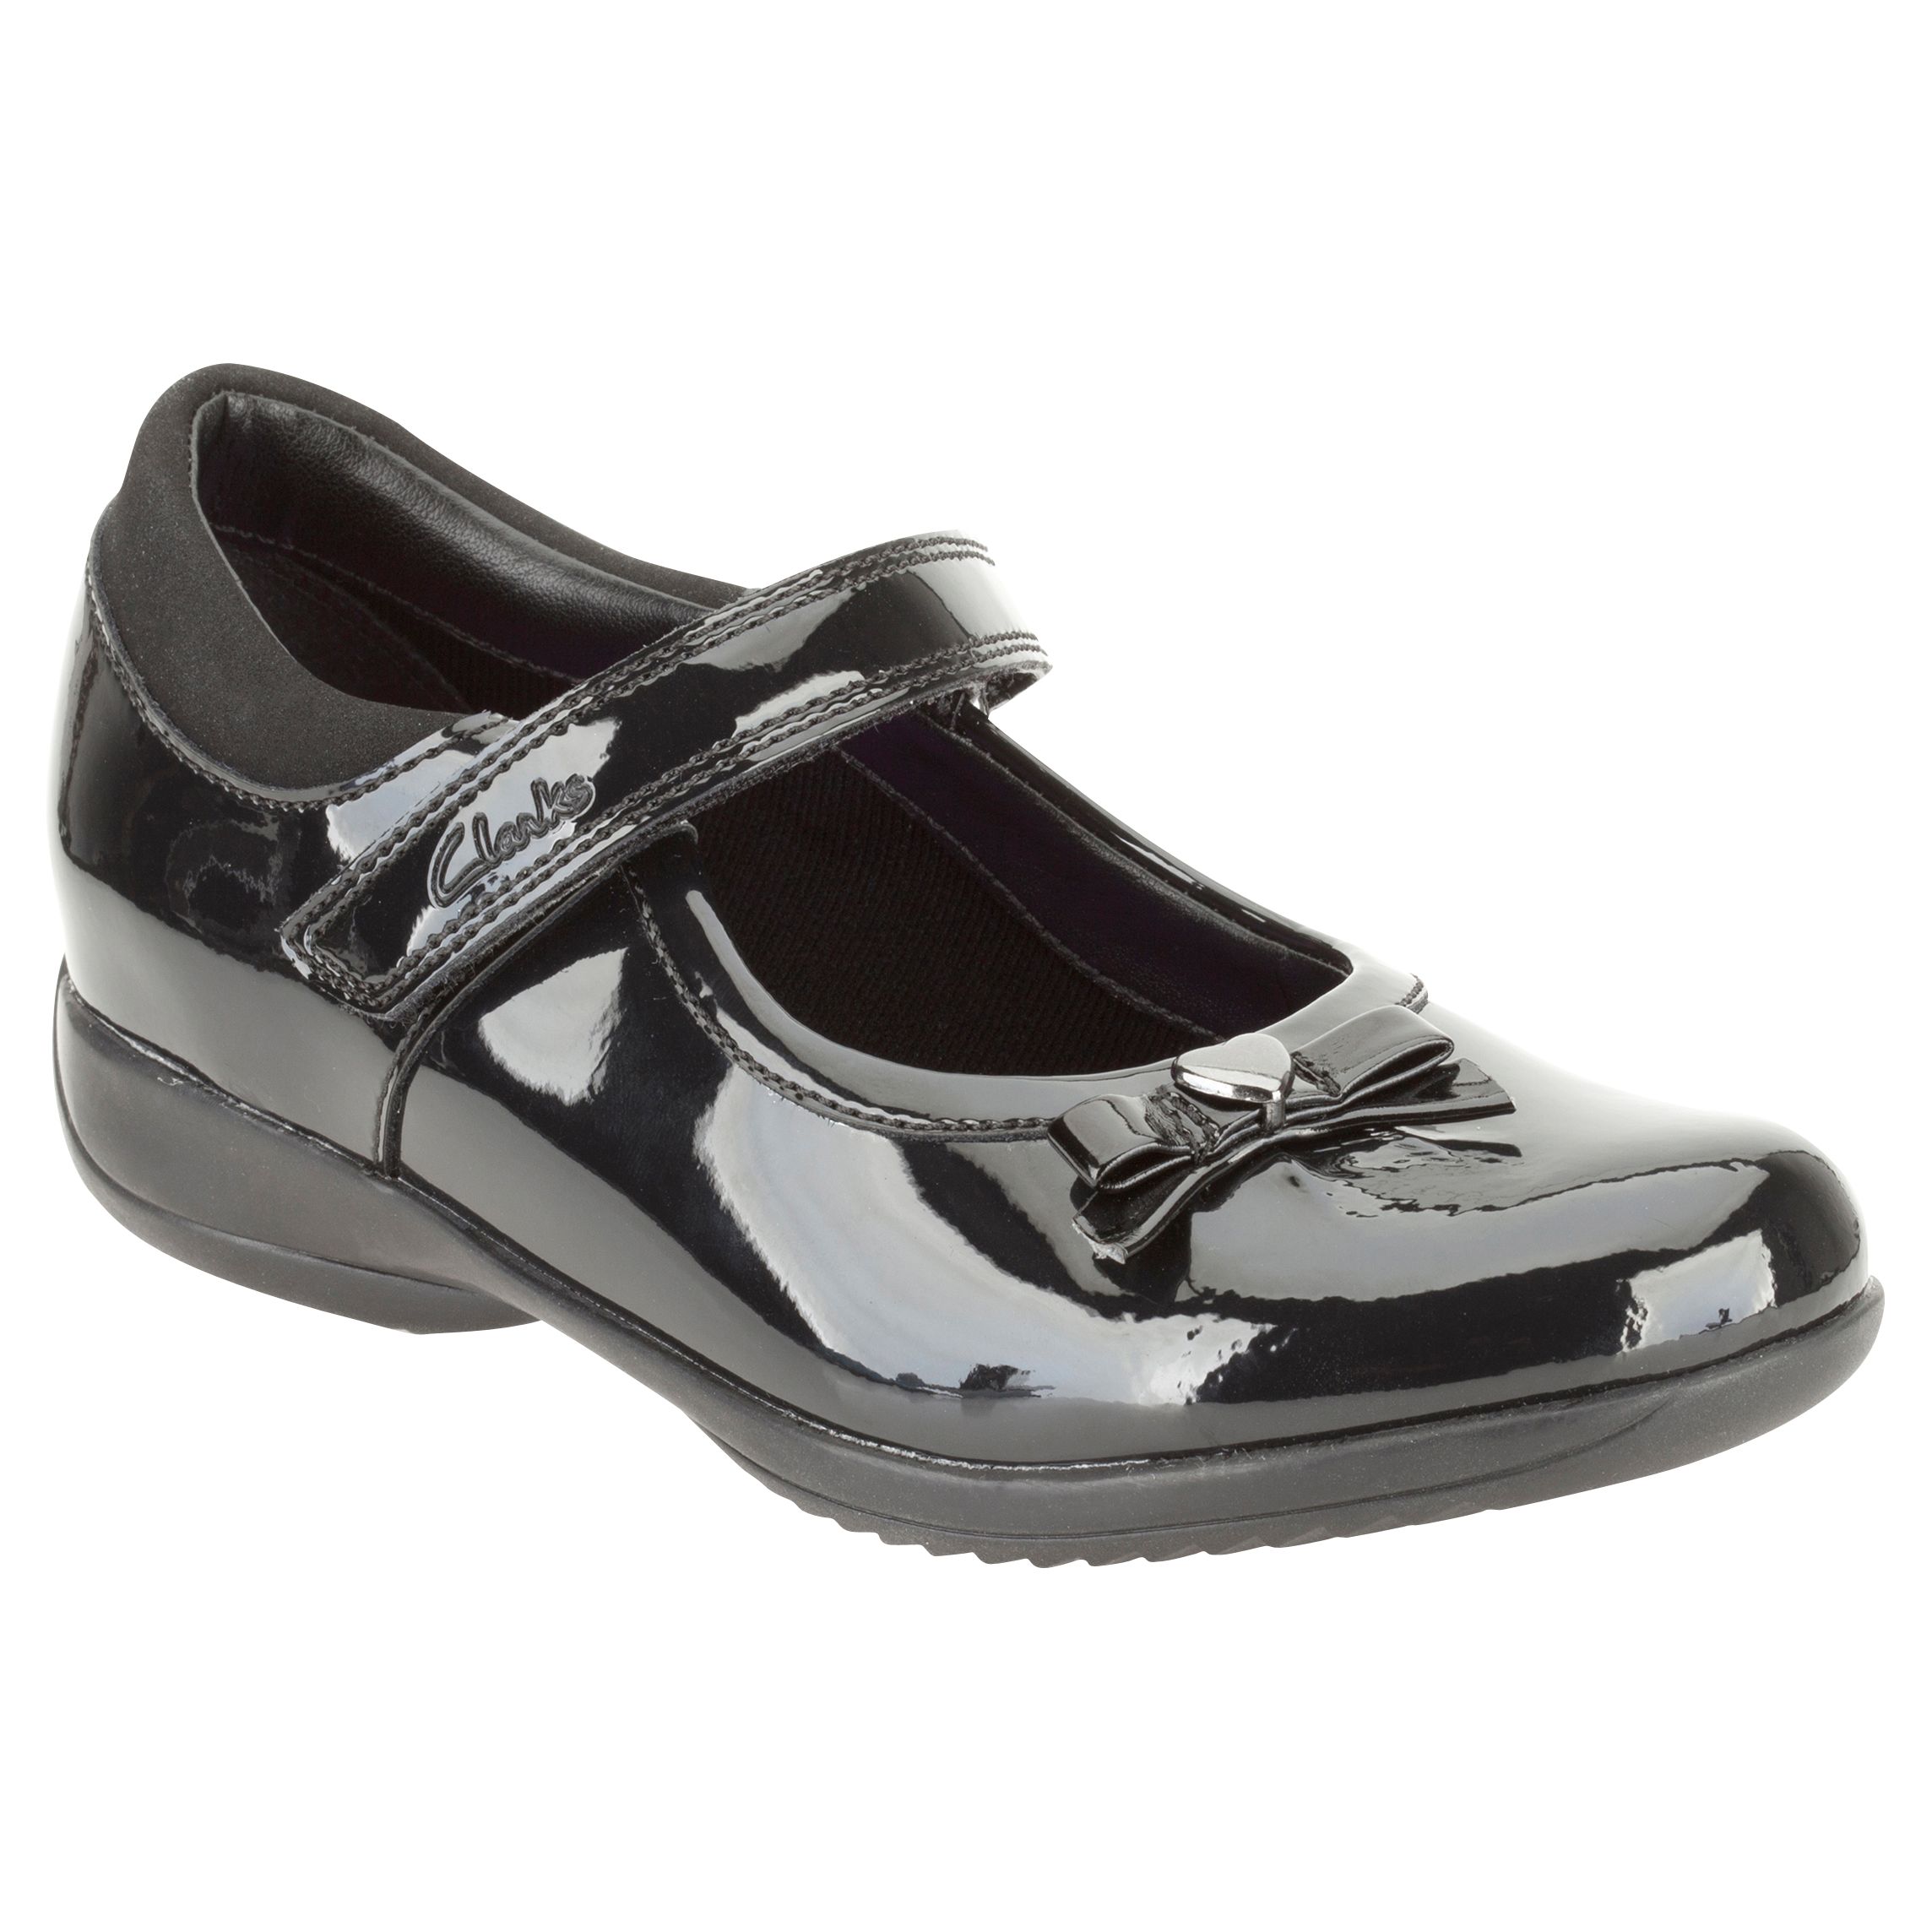 Clarks Daisy Gleam Shoes, Black Patent